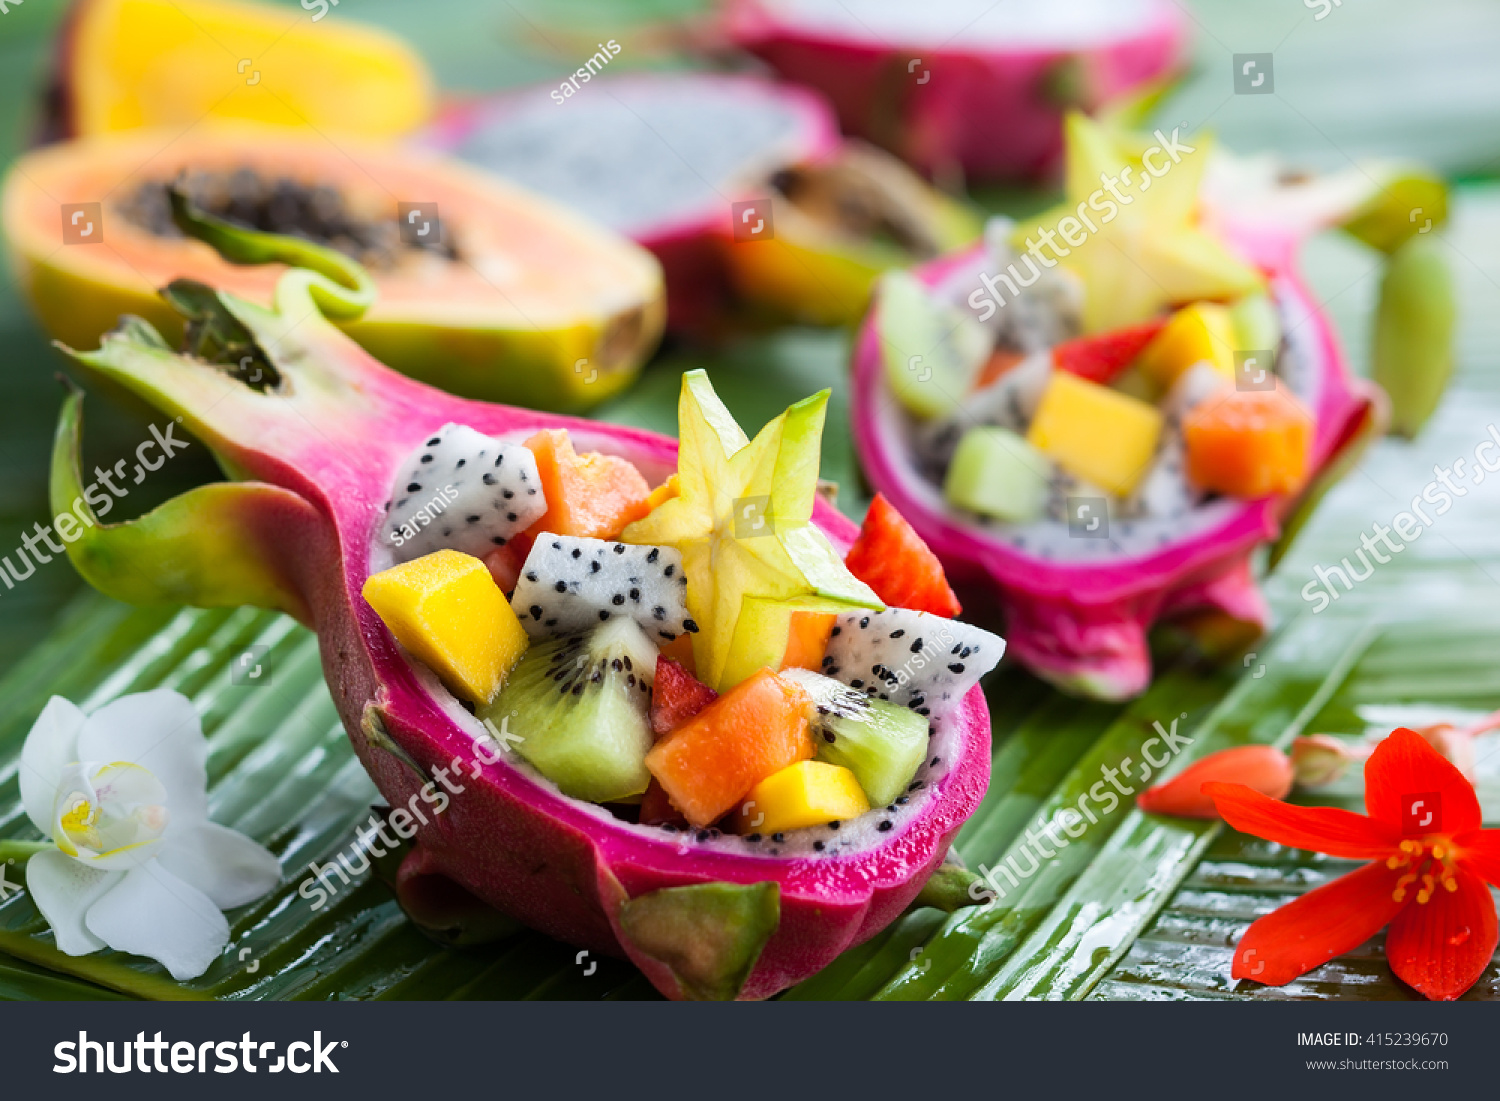 Exotic fruit salad served in half a dragon fruit #415239670